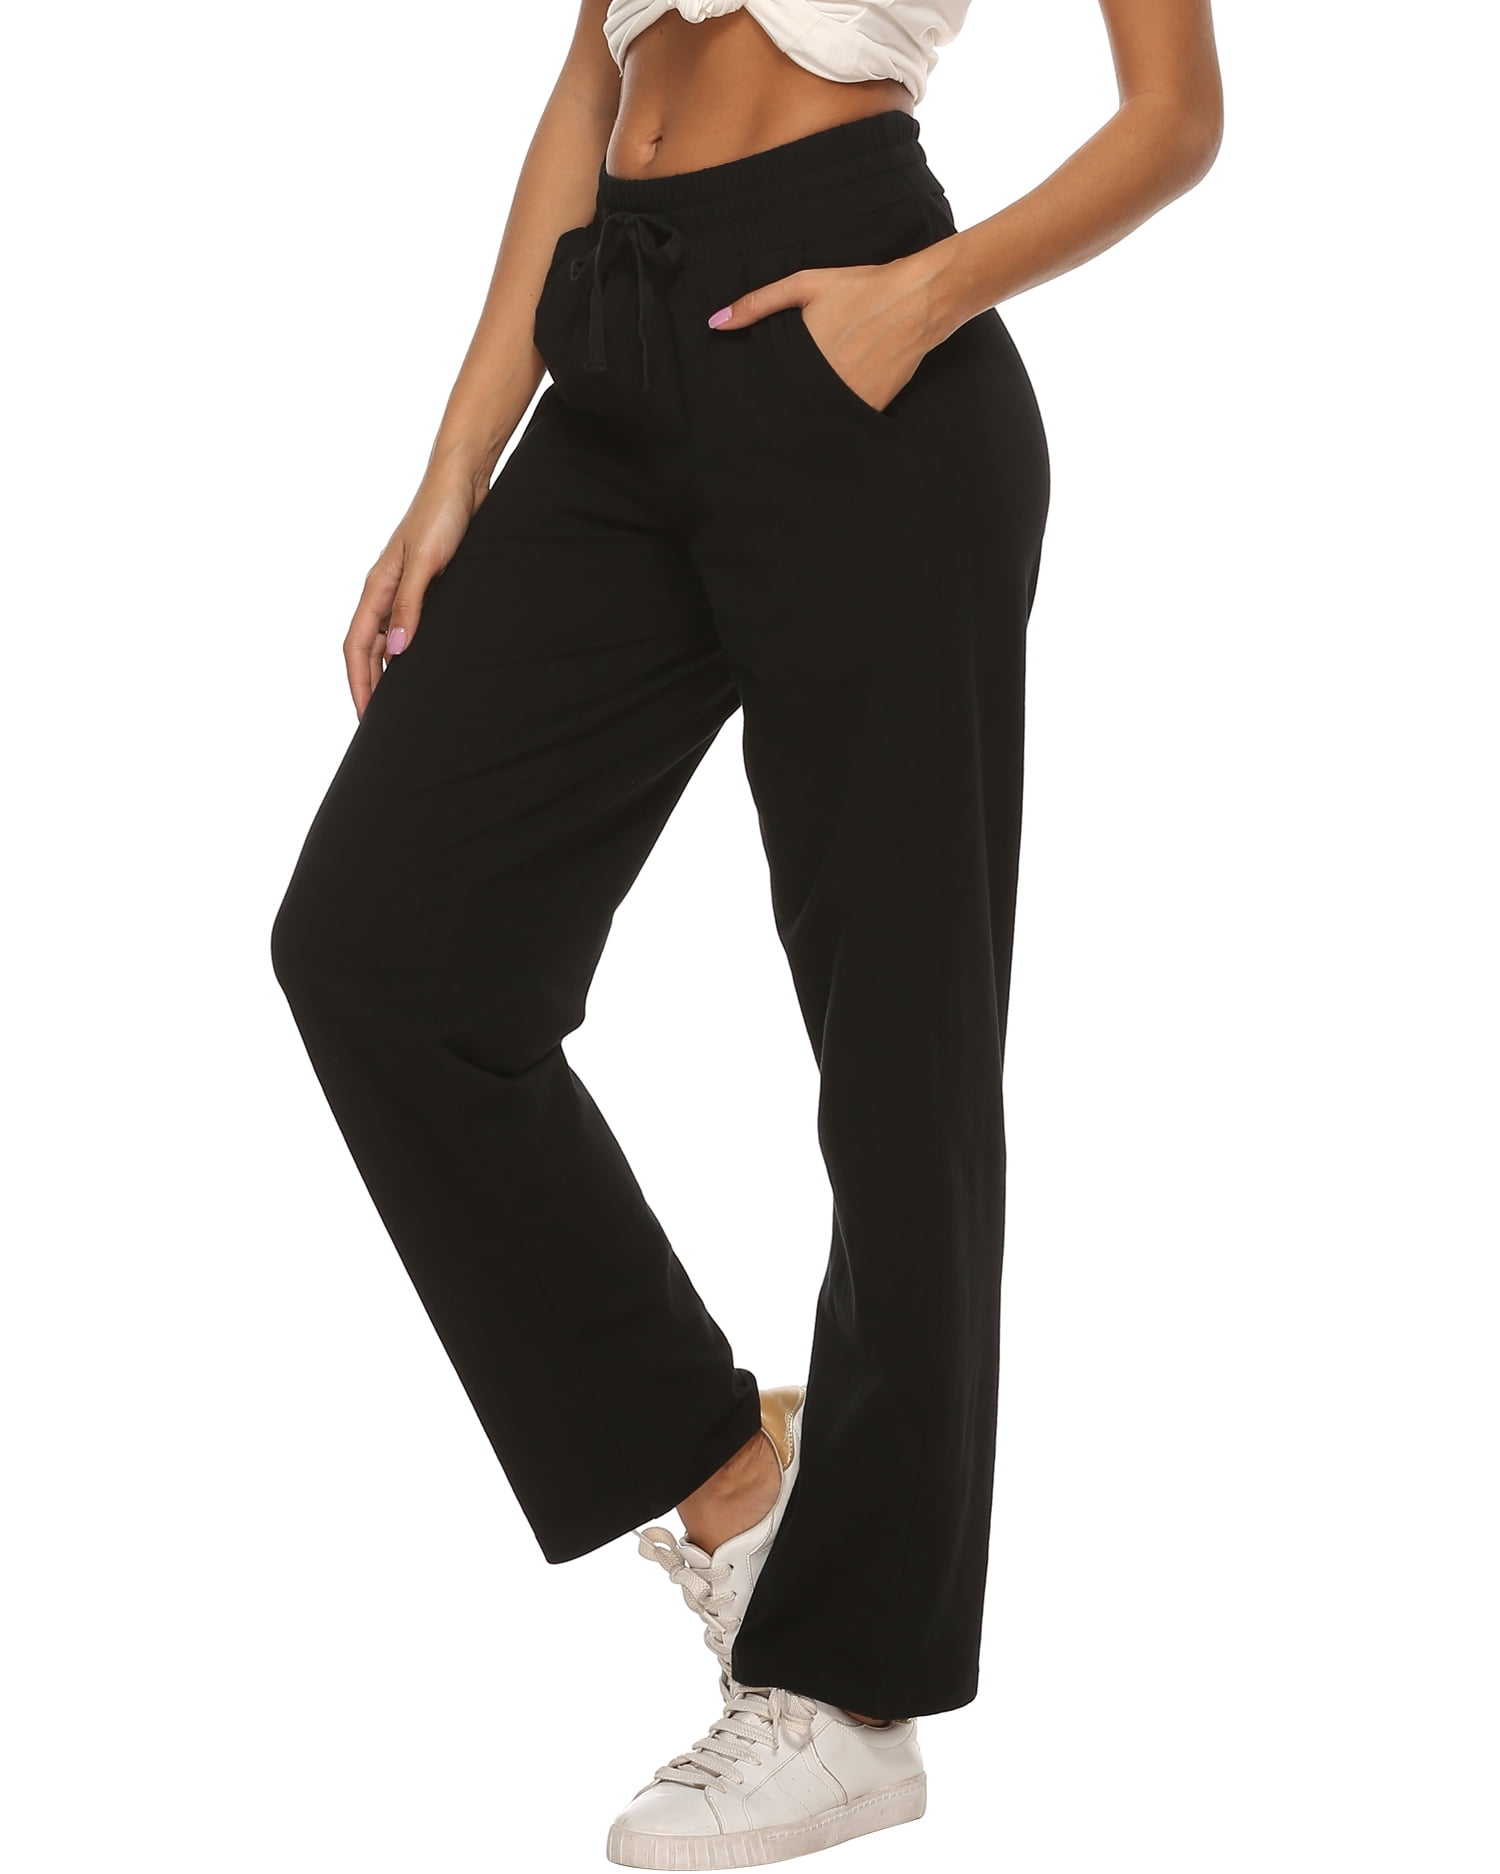 MOCOLY Women's Relaxed Yoga Sweatpants Lounge Pajamas Pants Black M ...